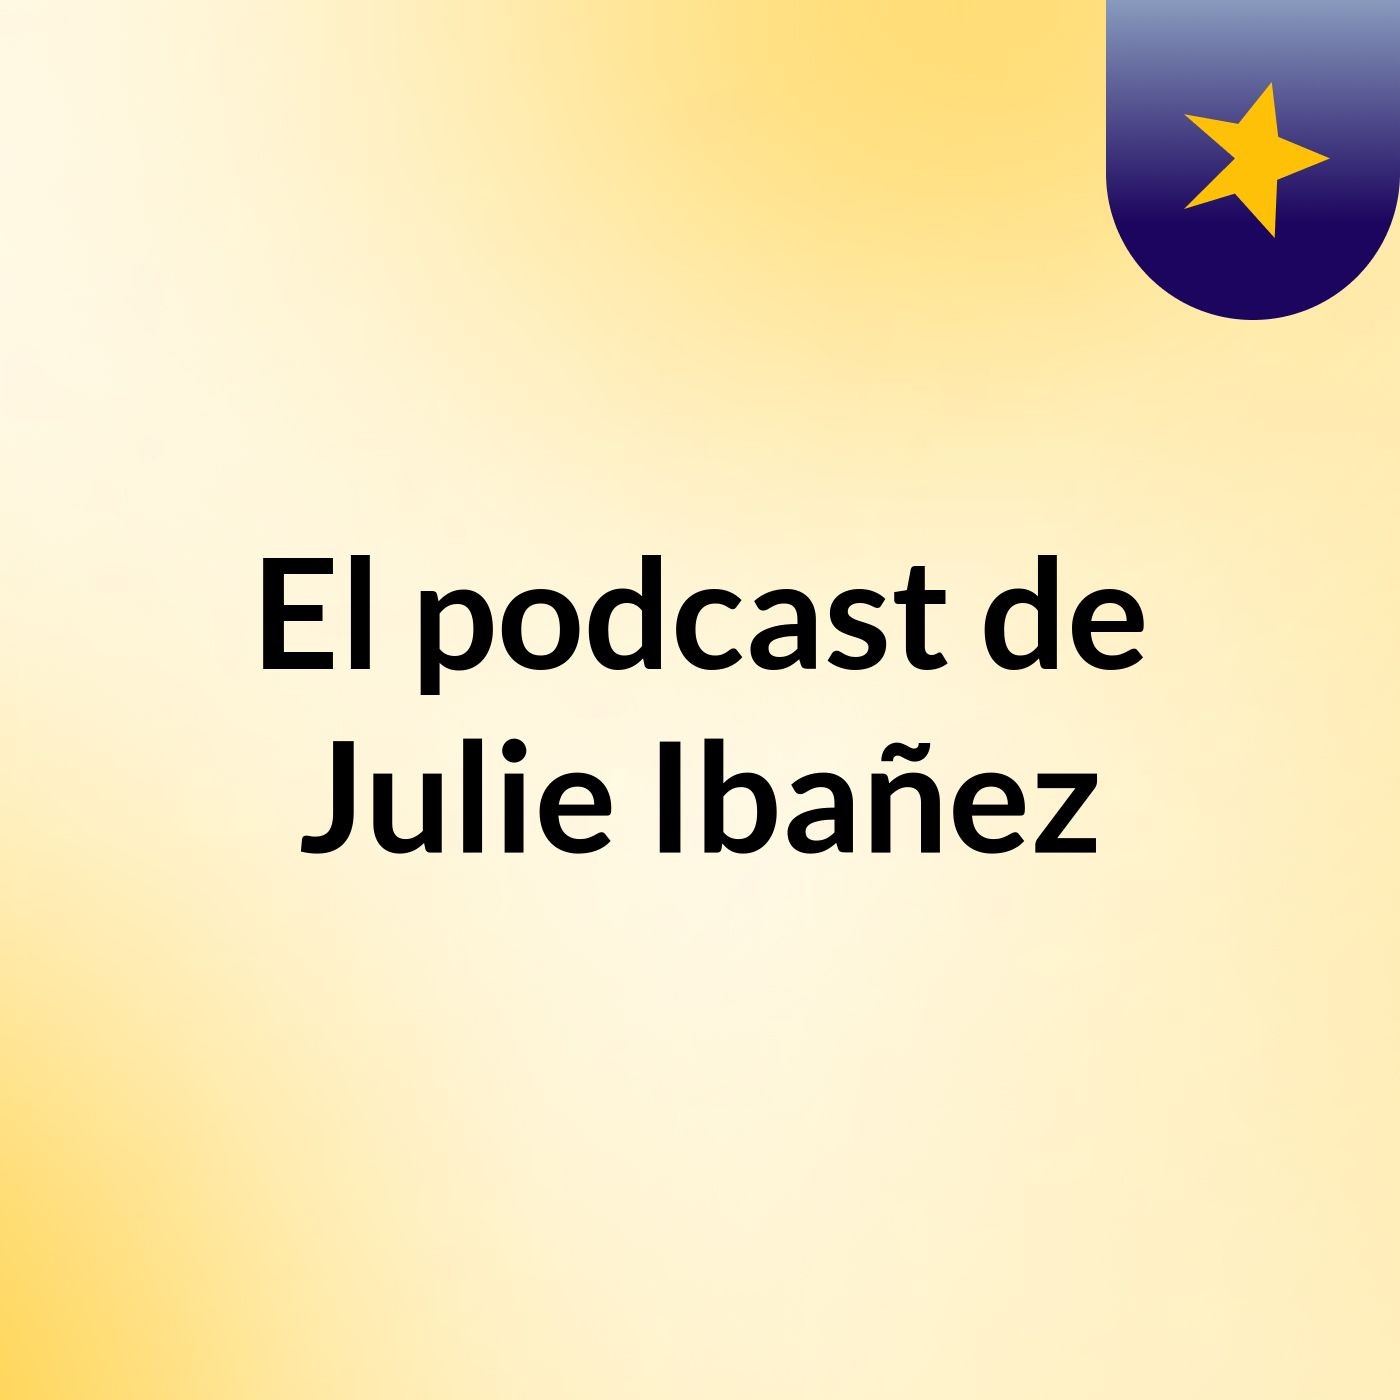 El podcast de Julie Ibañez